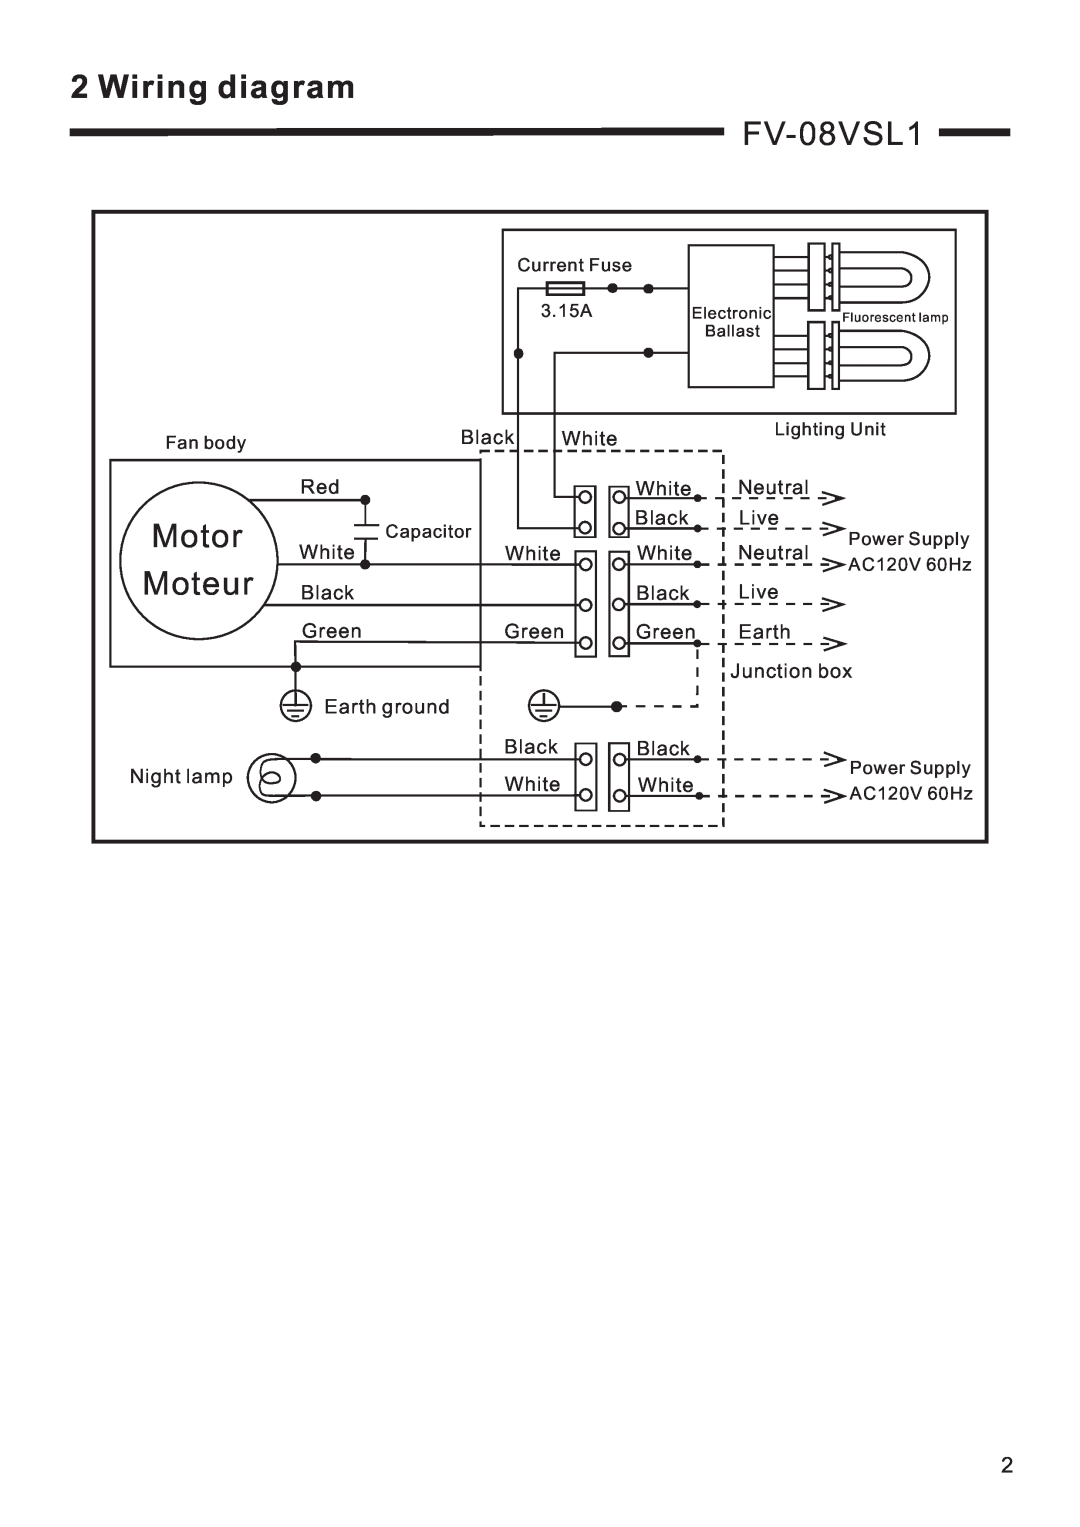 Panasonic FV-08VSL1 service manual Wiring diagram, Motor, Moteur 